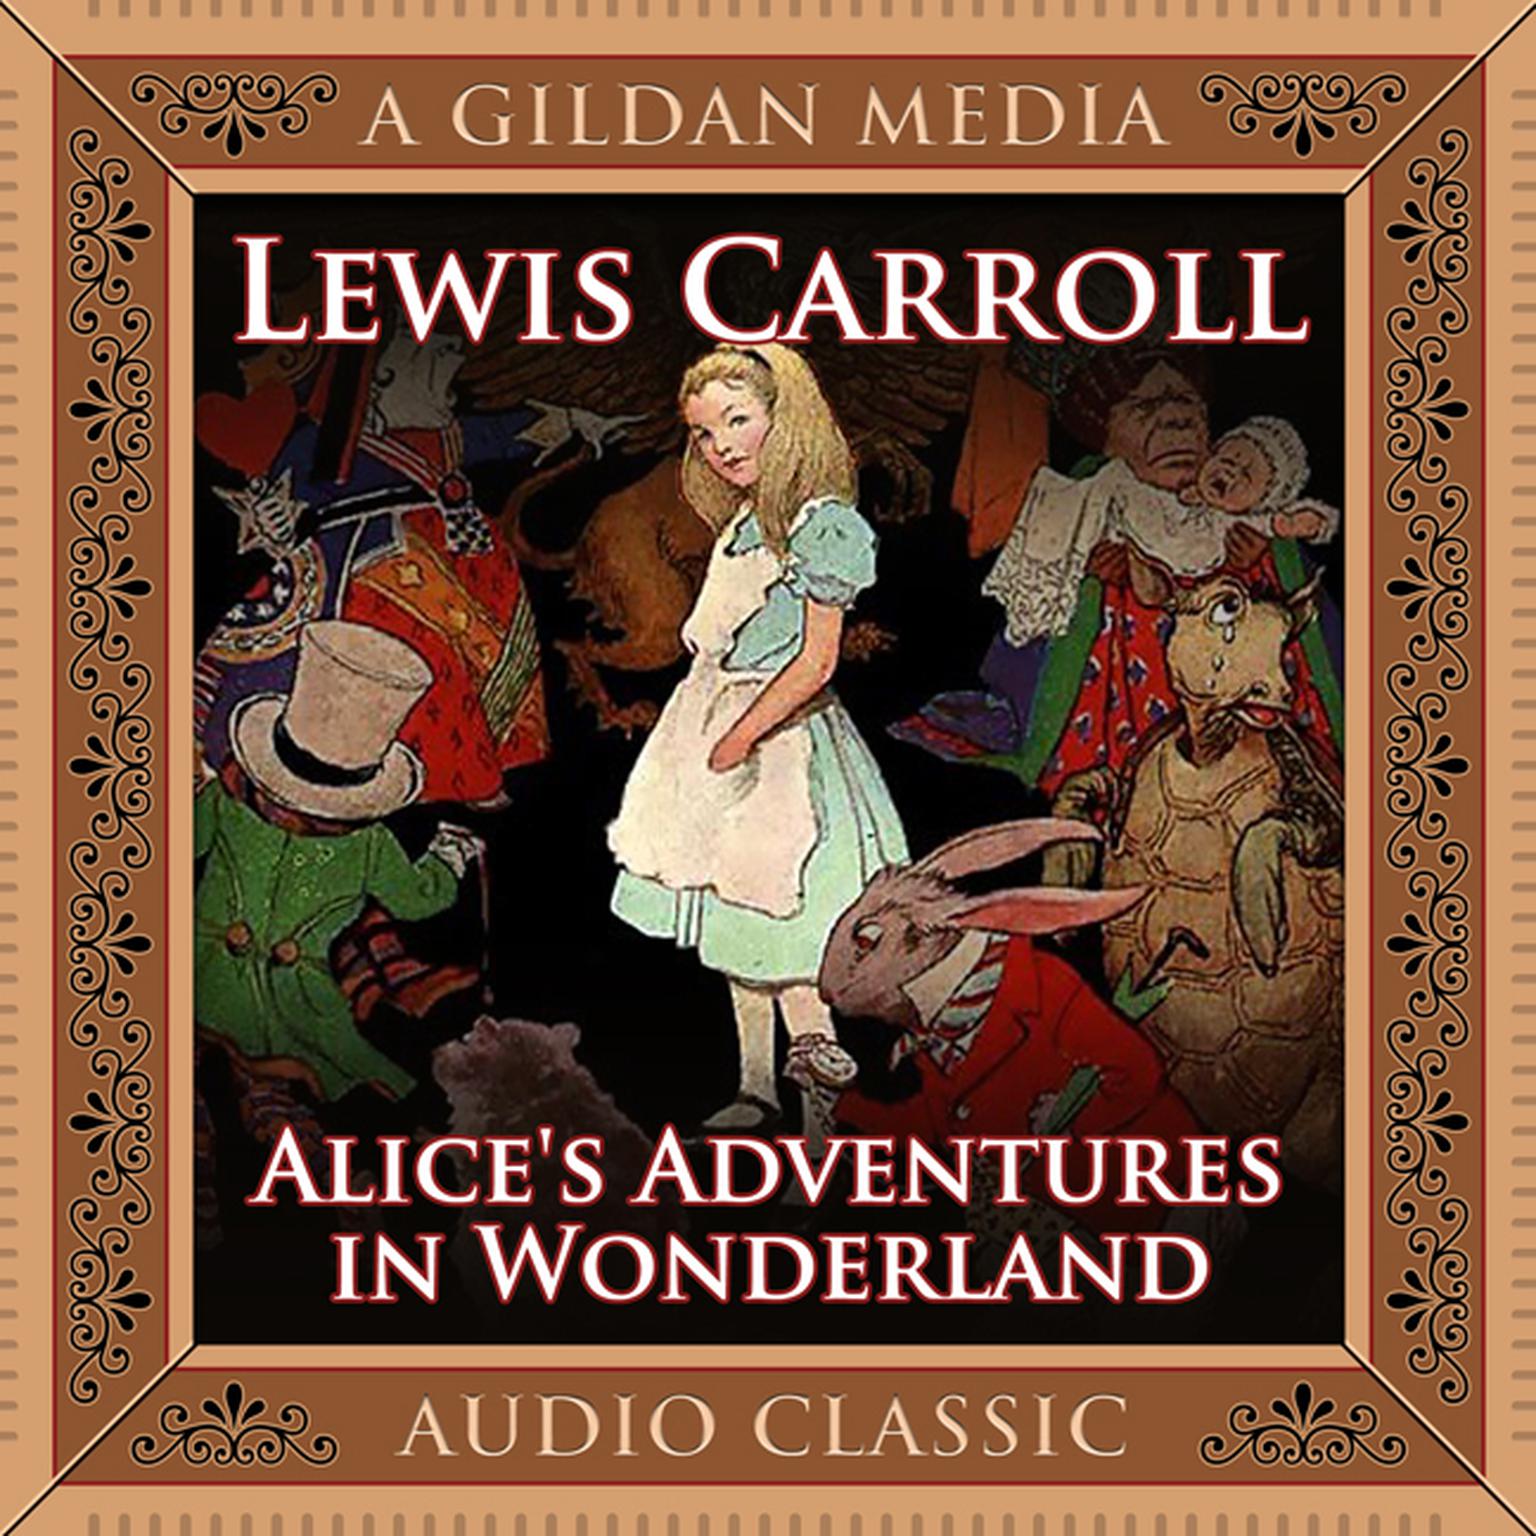 Alice's Adventures in Wonderland Audiobook by Lewis Carroll